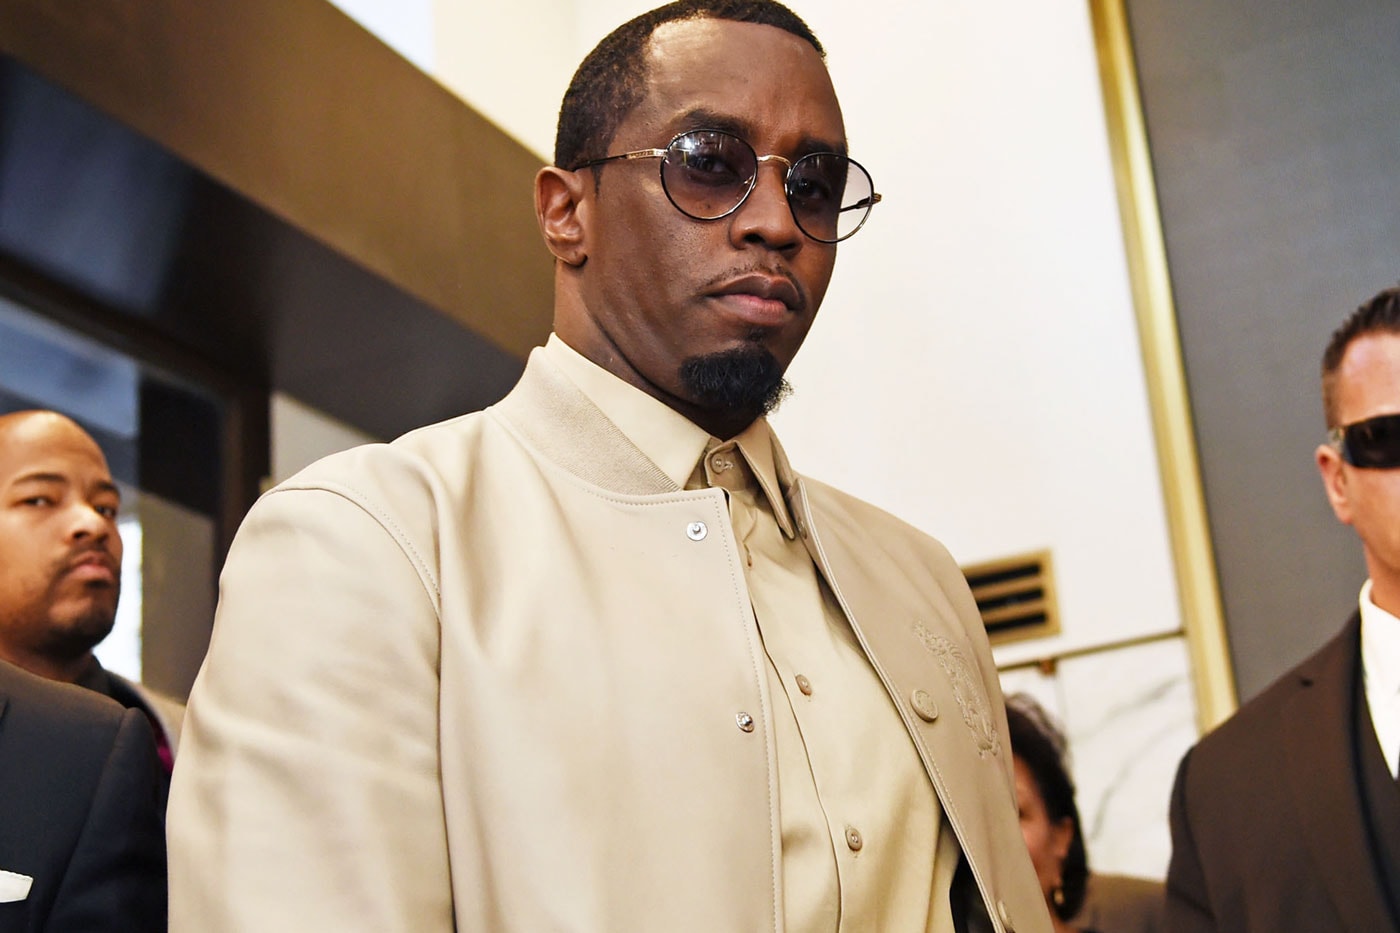 'Forbes'  Names its 2015 Hip-Hop Cash Kings